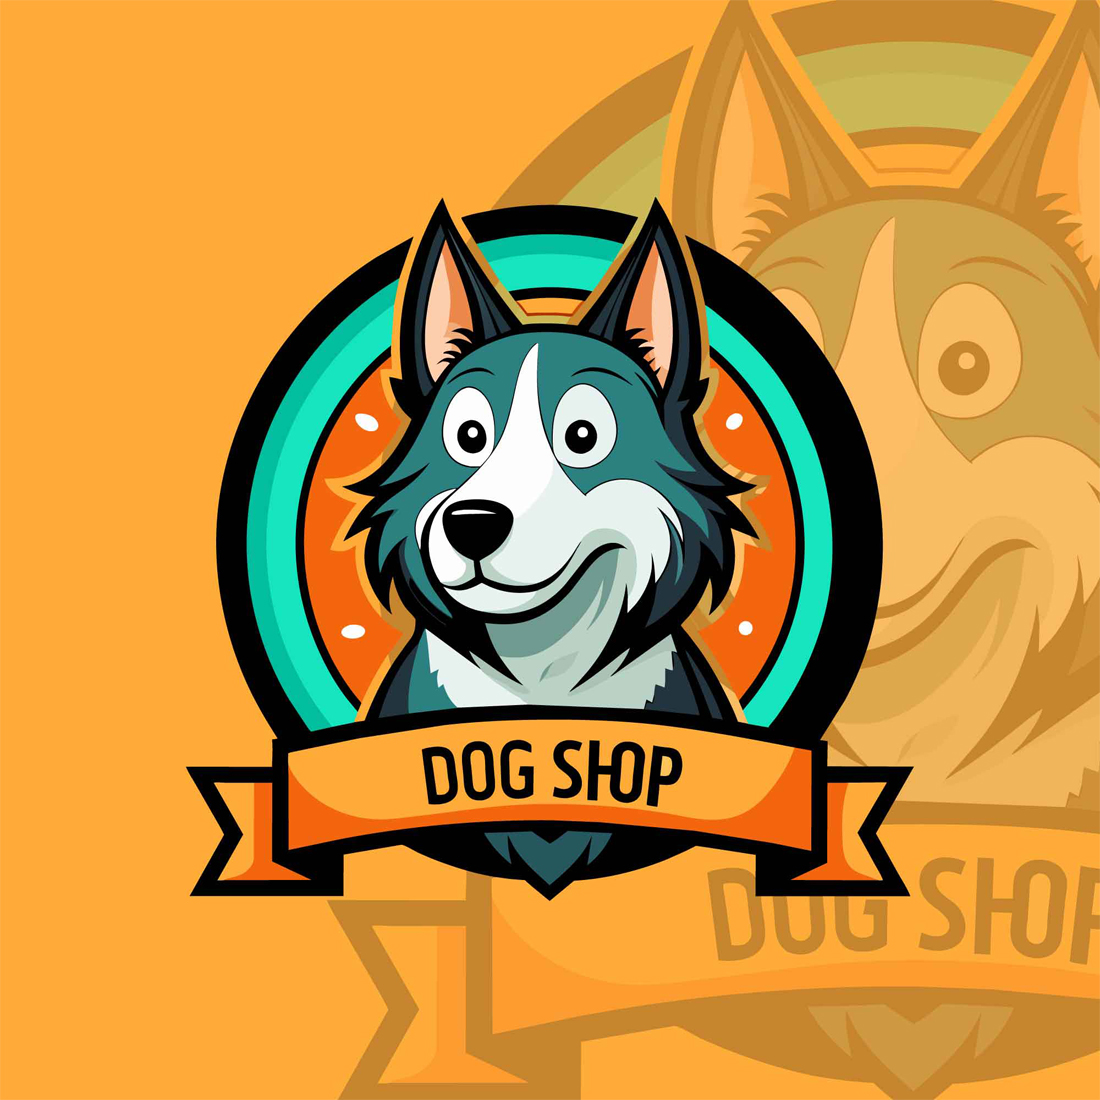 Mascot Dog Shop Logo cover image.